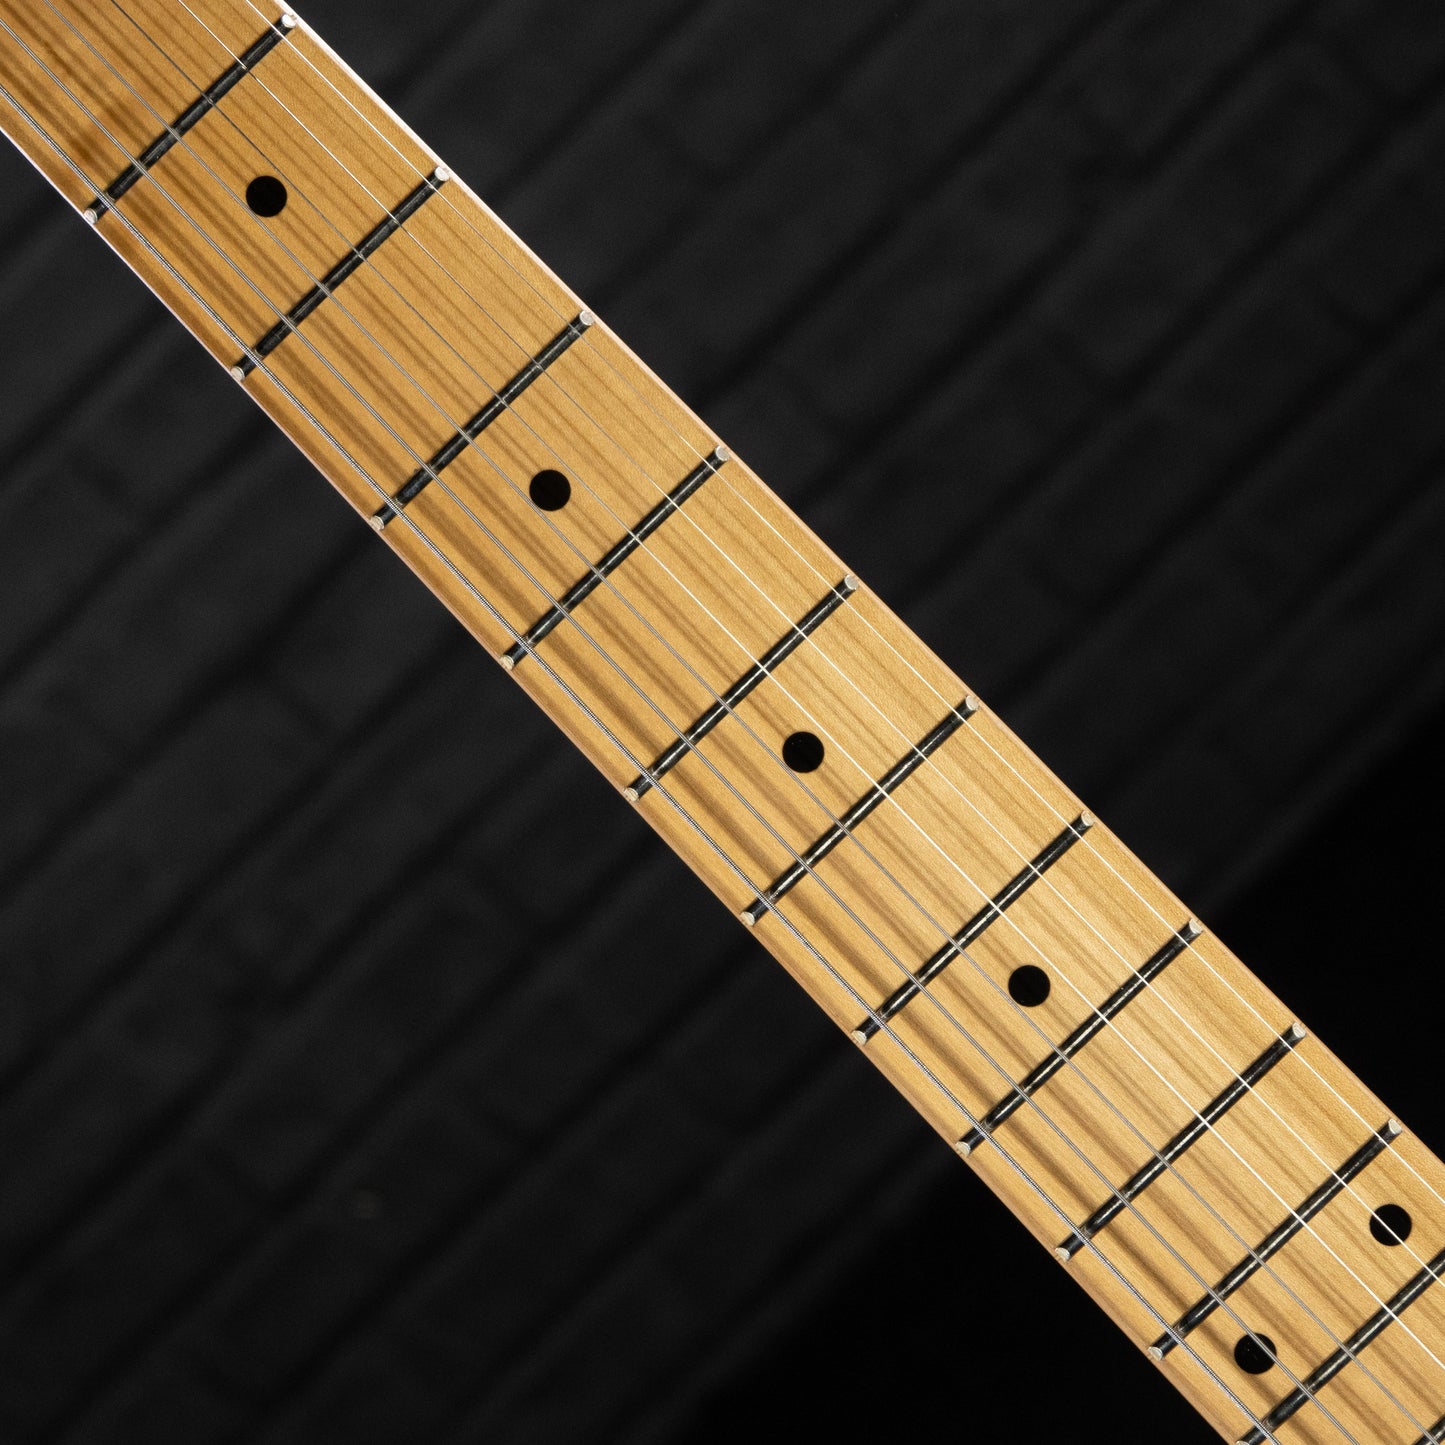 Tagima TG-530 Electric Guitar (Lake Placid Blue)